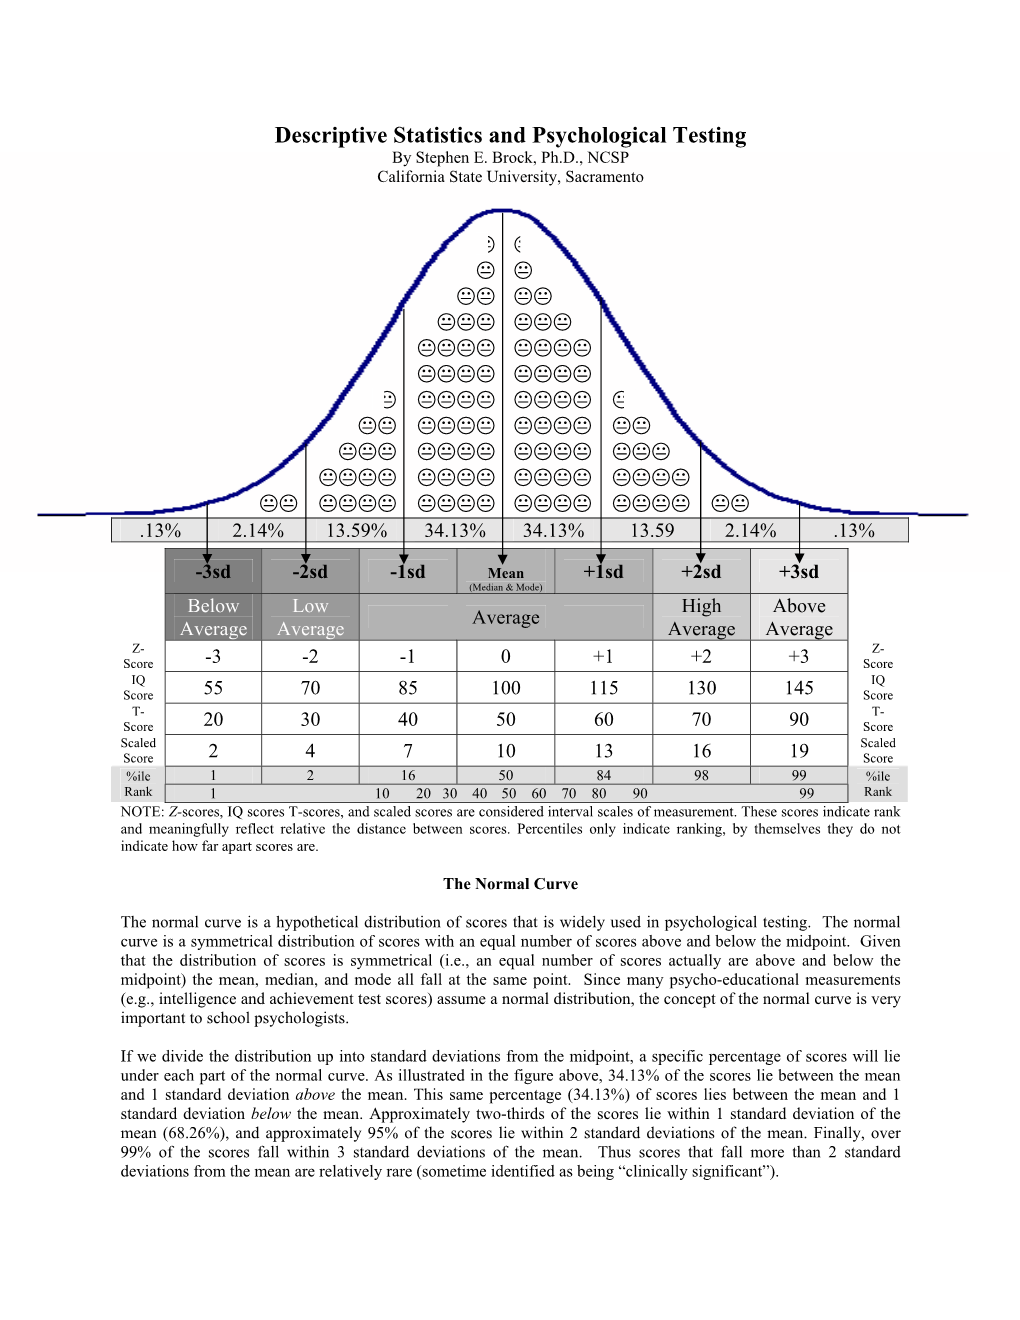 Descriptive Statistics and Psychological Testing by Stephen E